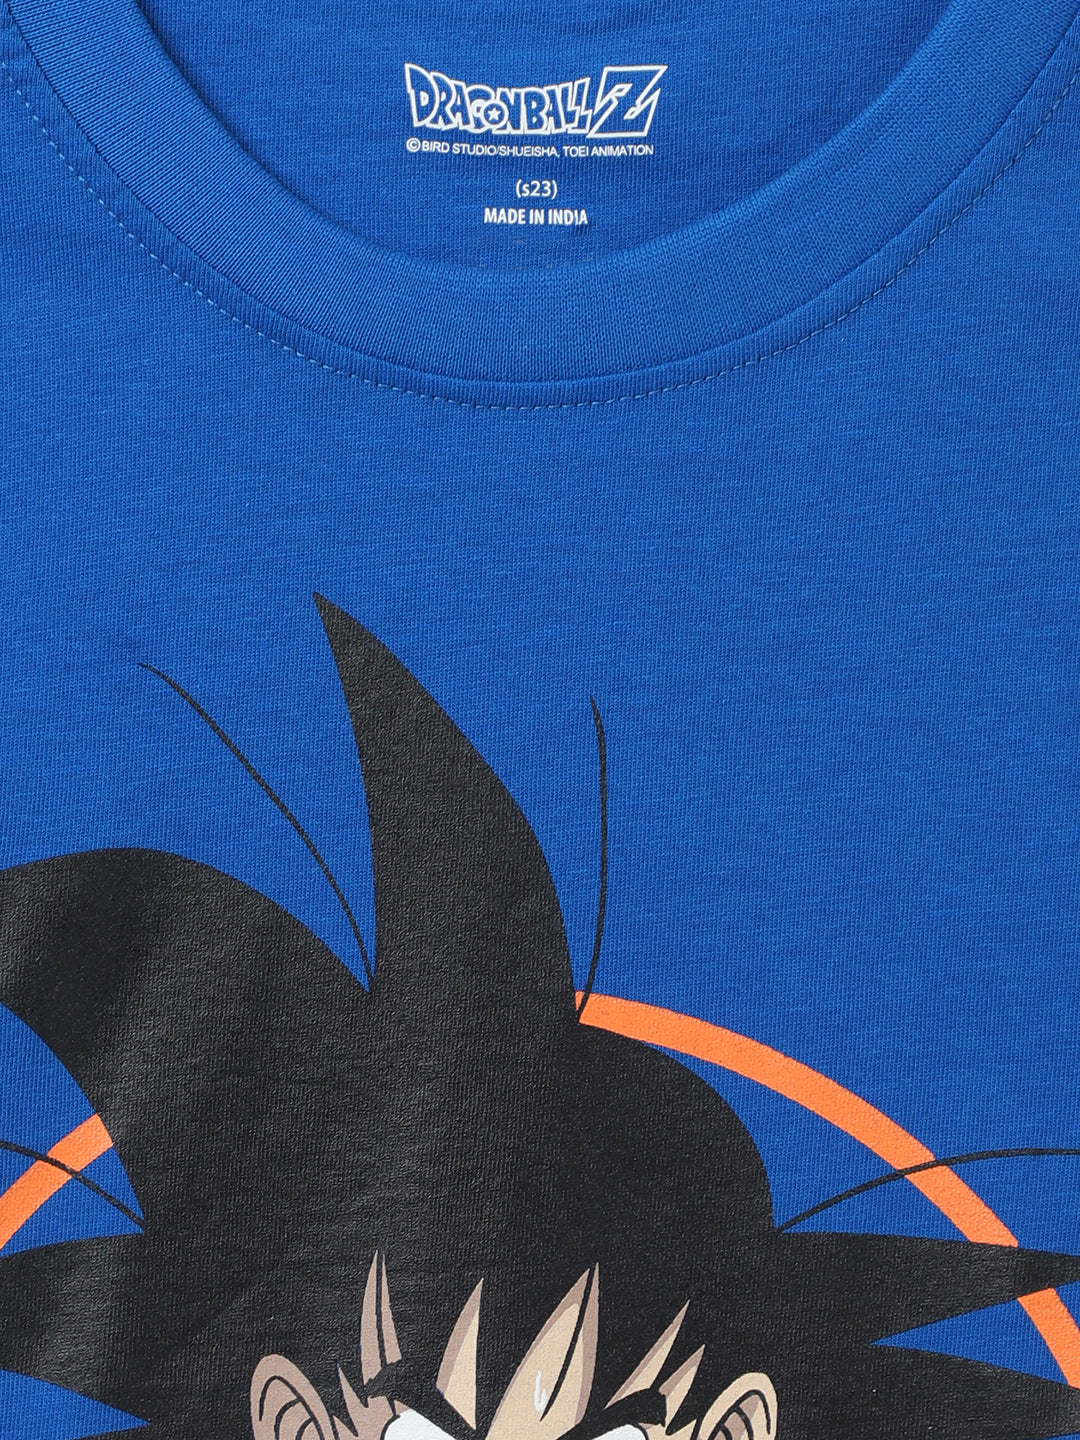 Kidsville Dragon Ball Z Printed Blue Tshirt For Boys